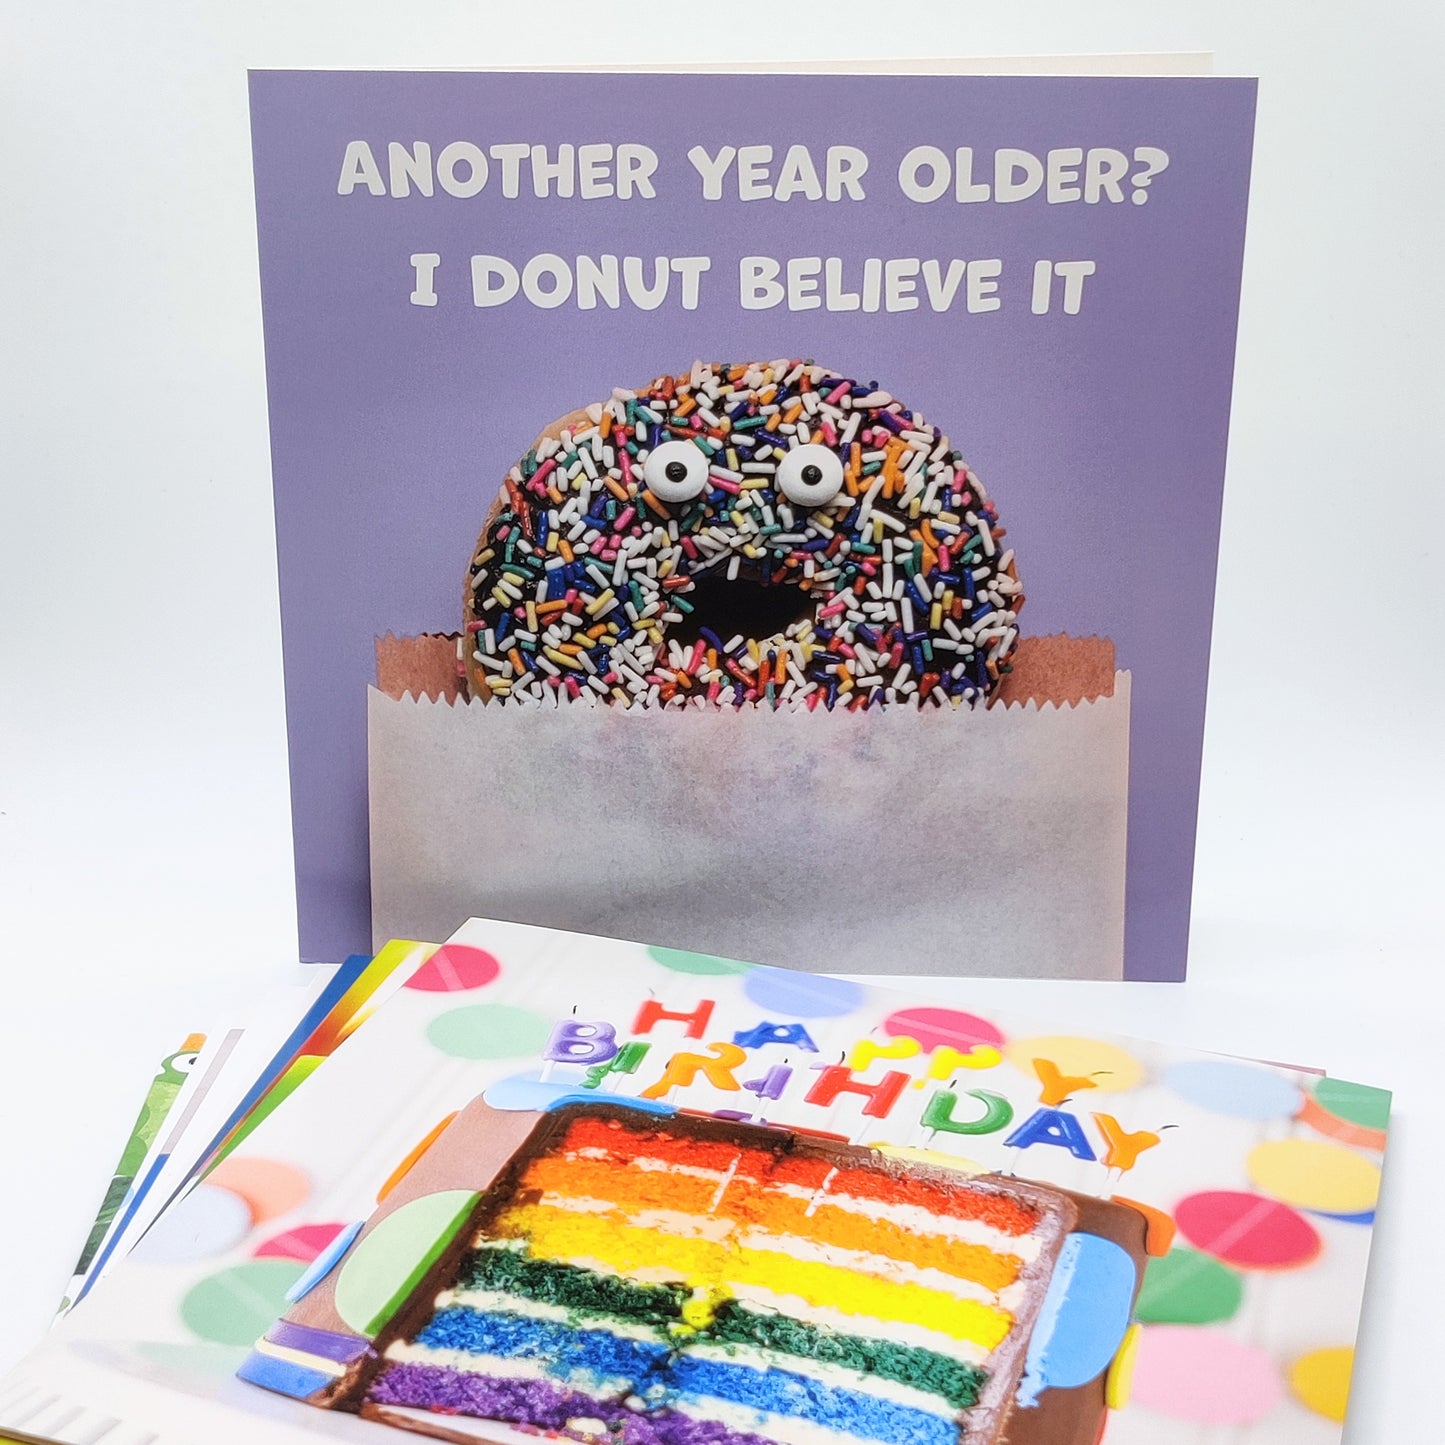 10 Mixed Birthday Cards